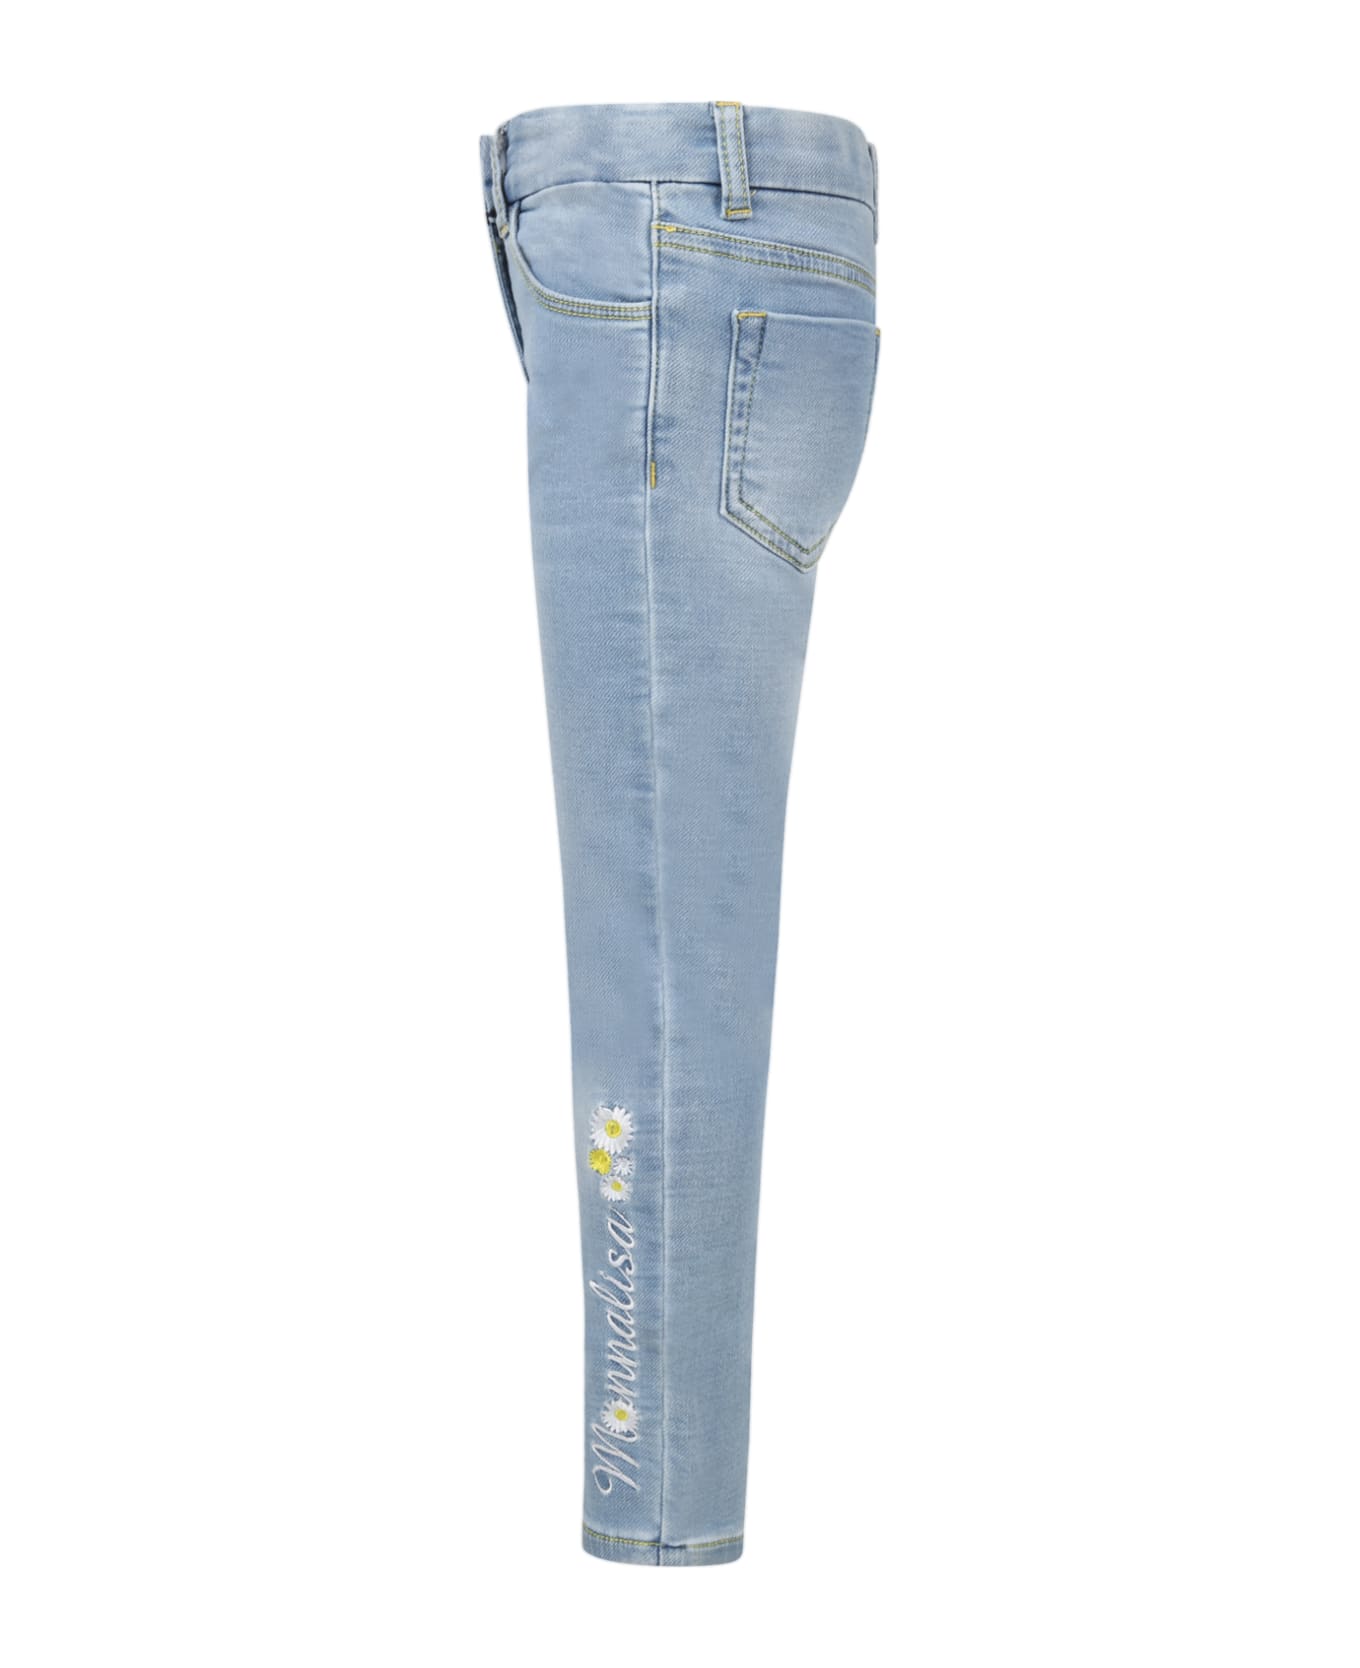 Monnalisa Light-blue Jeans For Girl With Logo